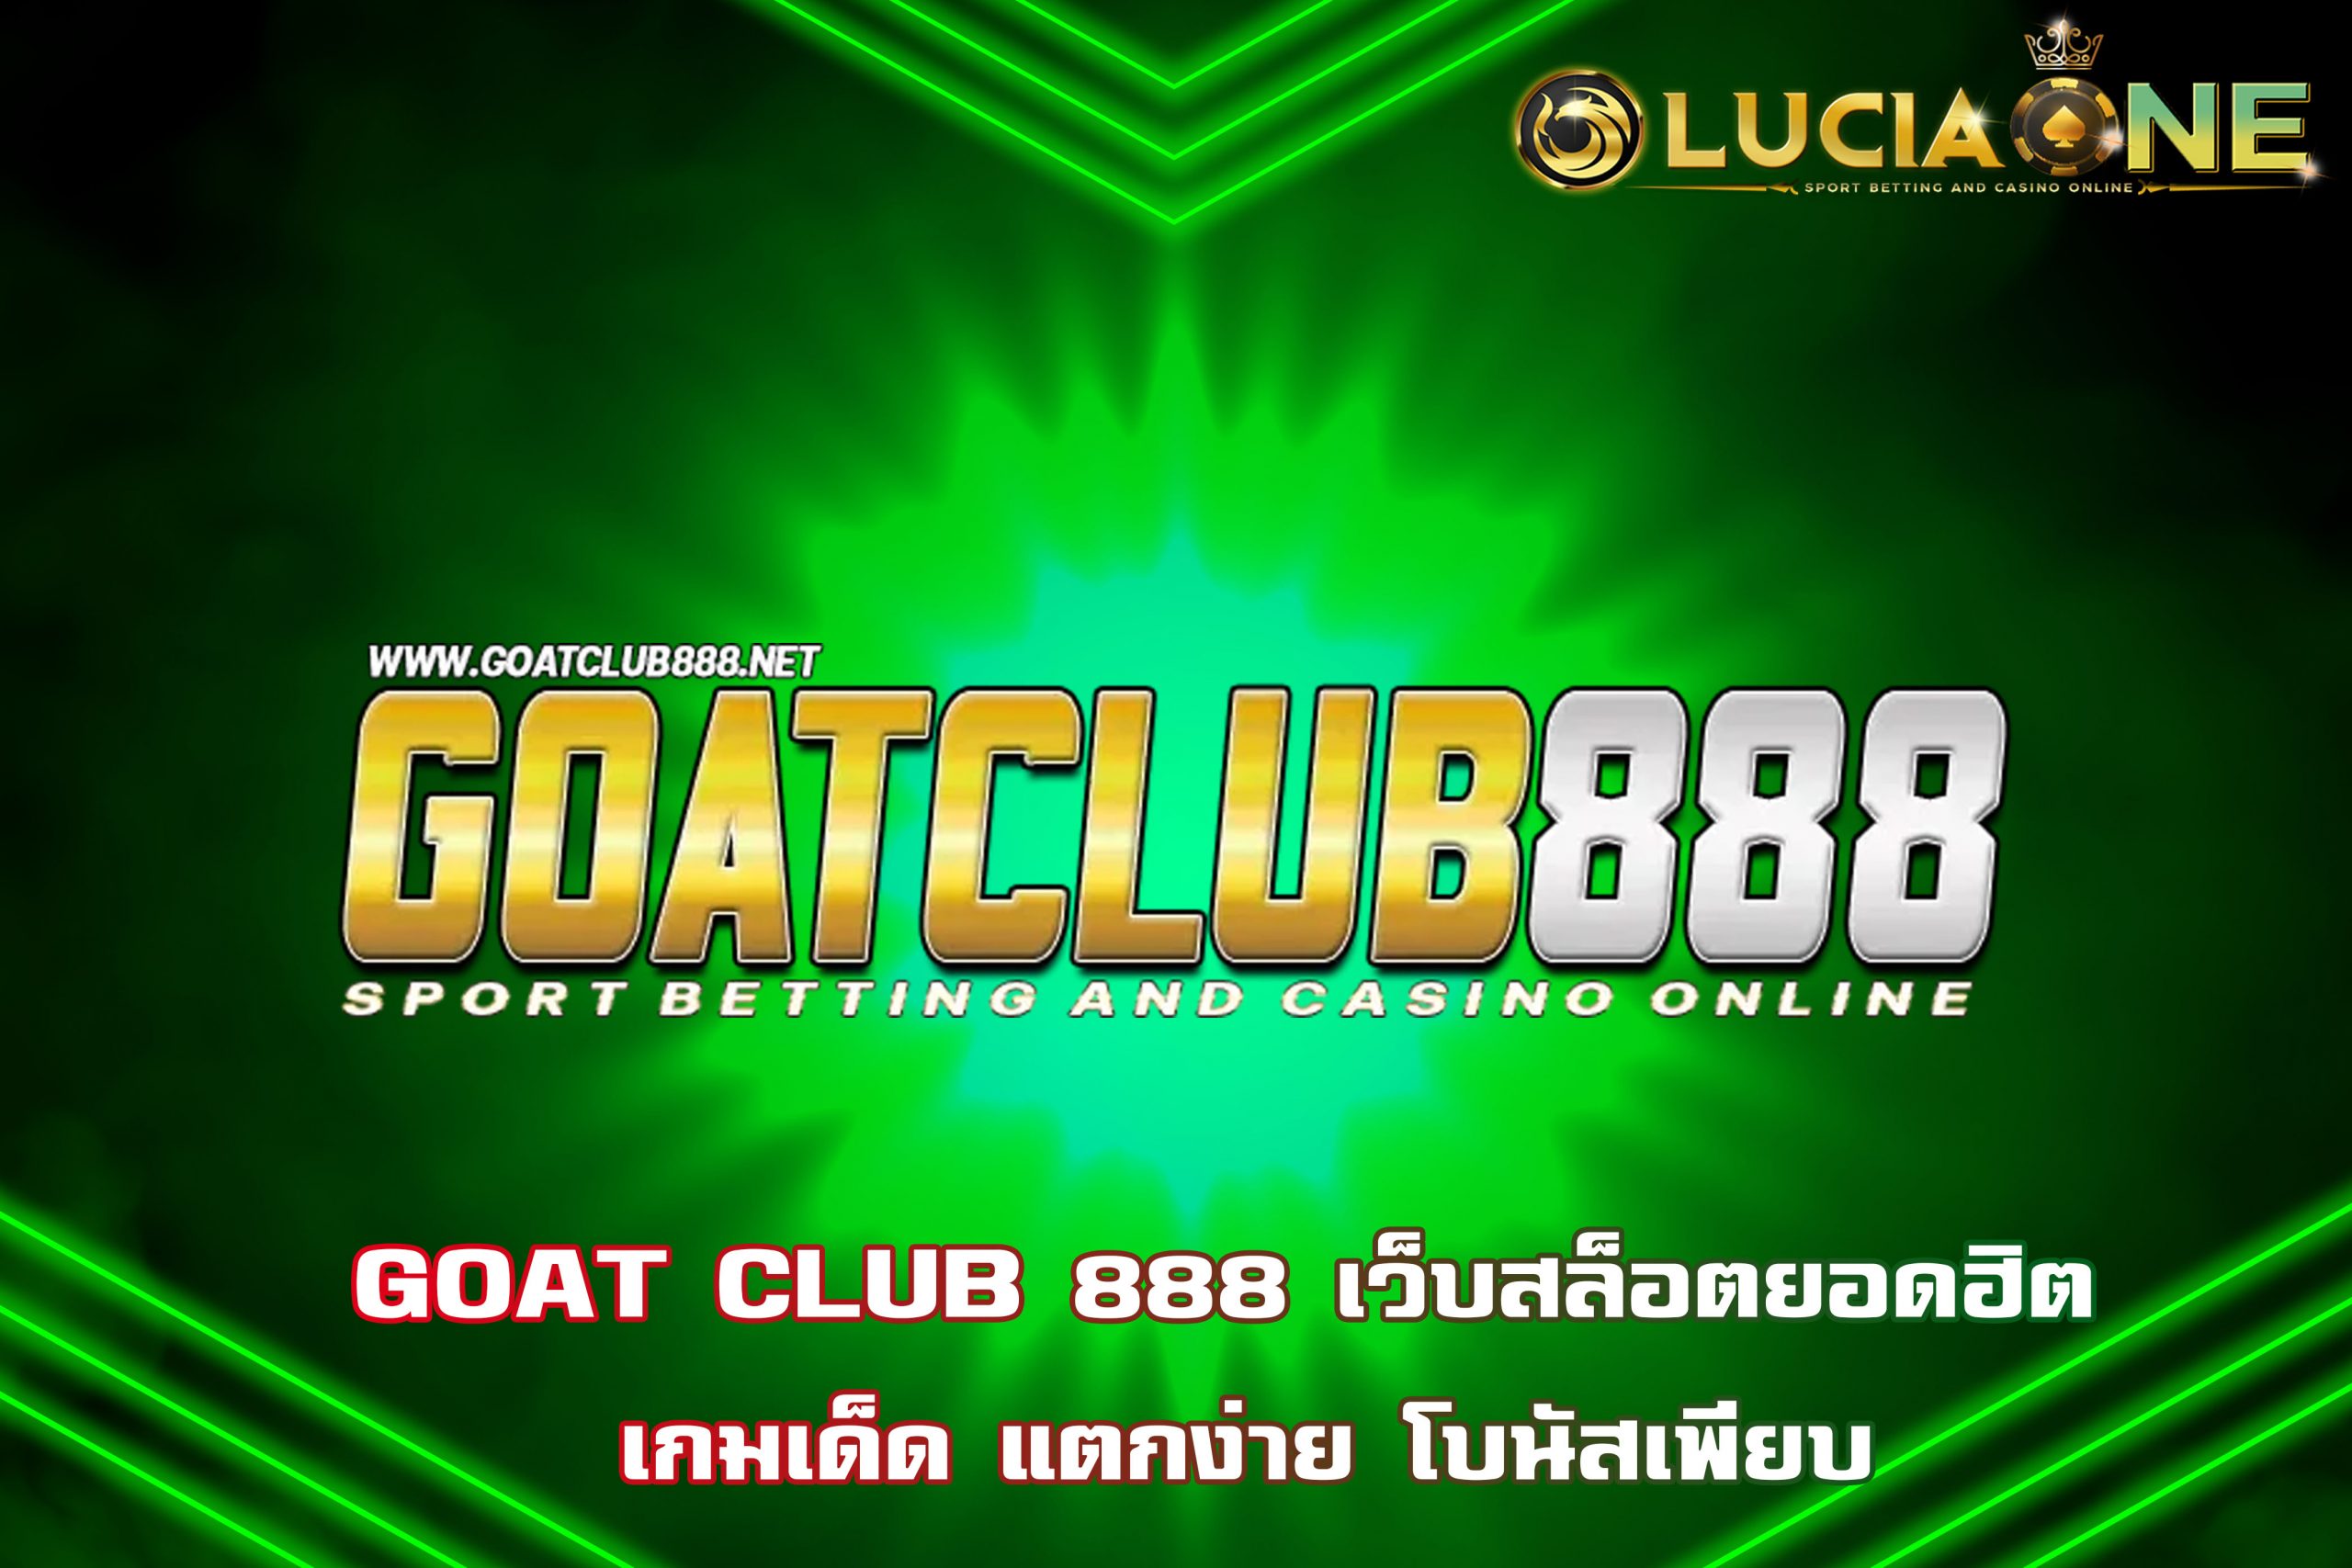 GOAT CLUB 888